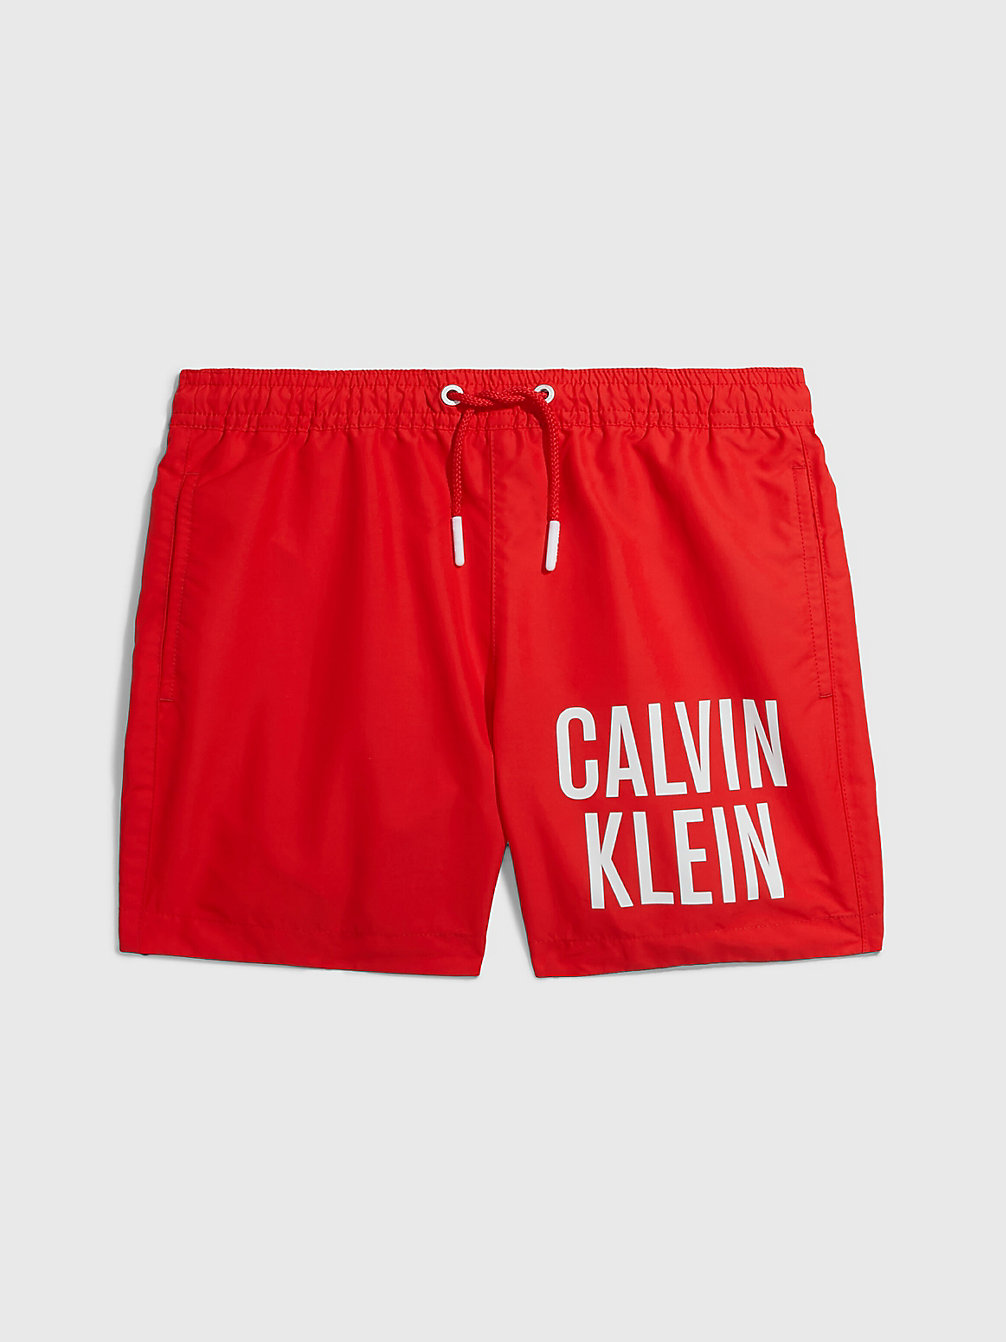 CAJUN RED > Boys Swim Trunks - Intense Power > undefined boys - Calvin Klein